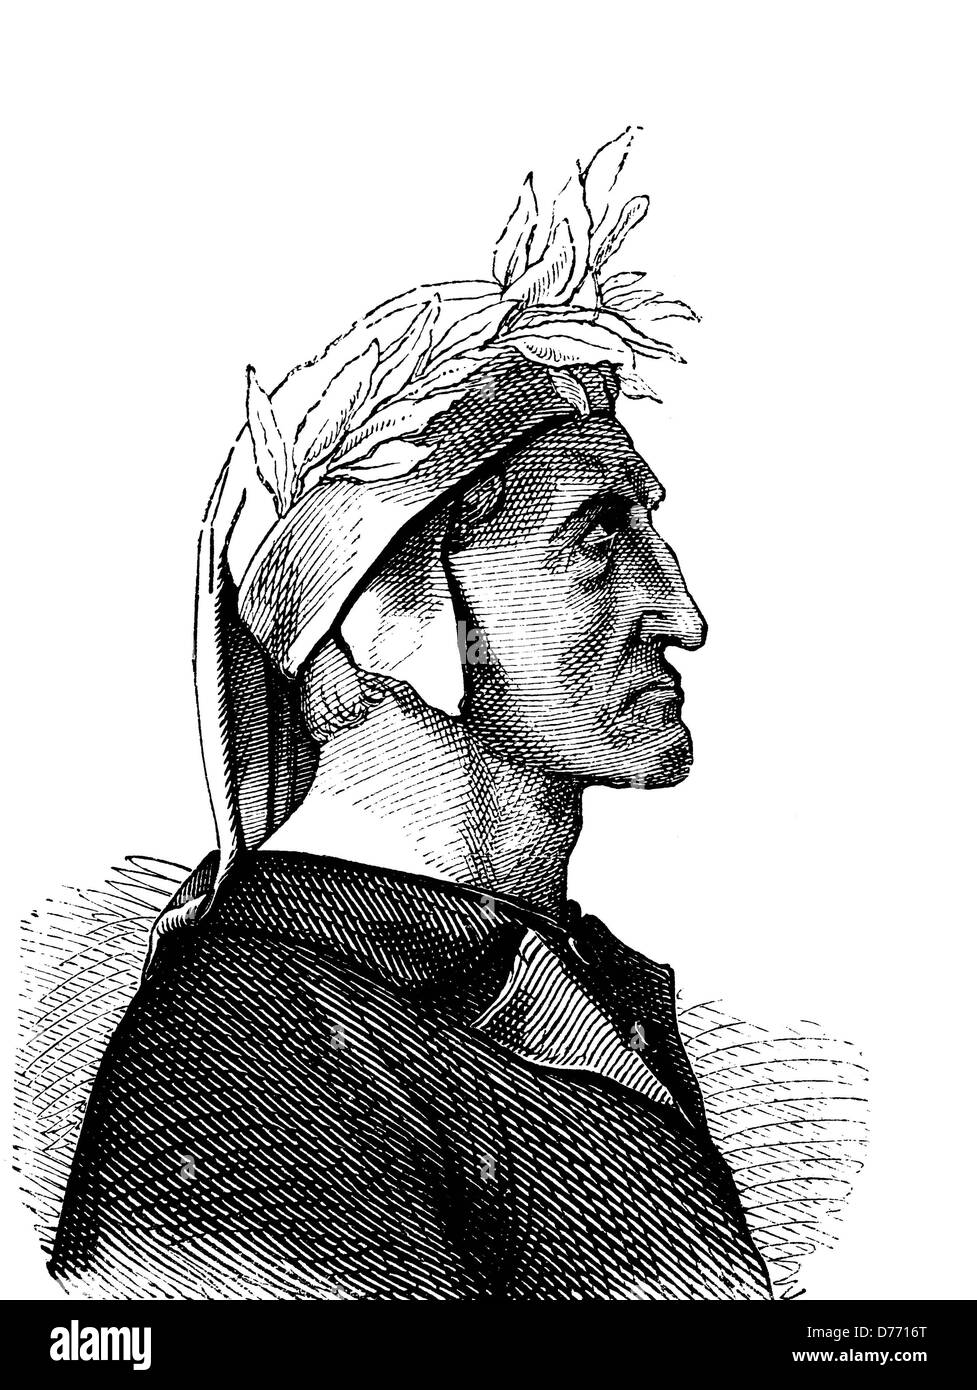 Dante Alighieri, 1265 - 1321, Italian poet and philosopher, historical woodcut, 1880 Stock Photo